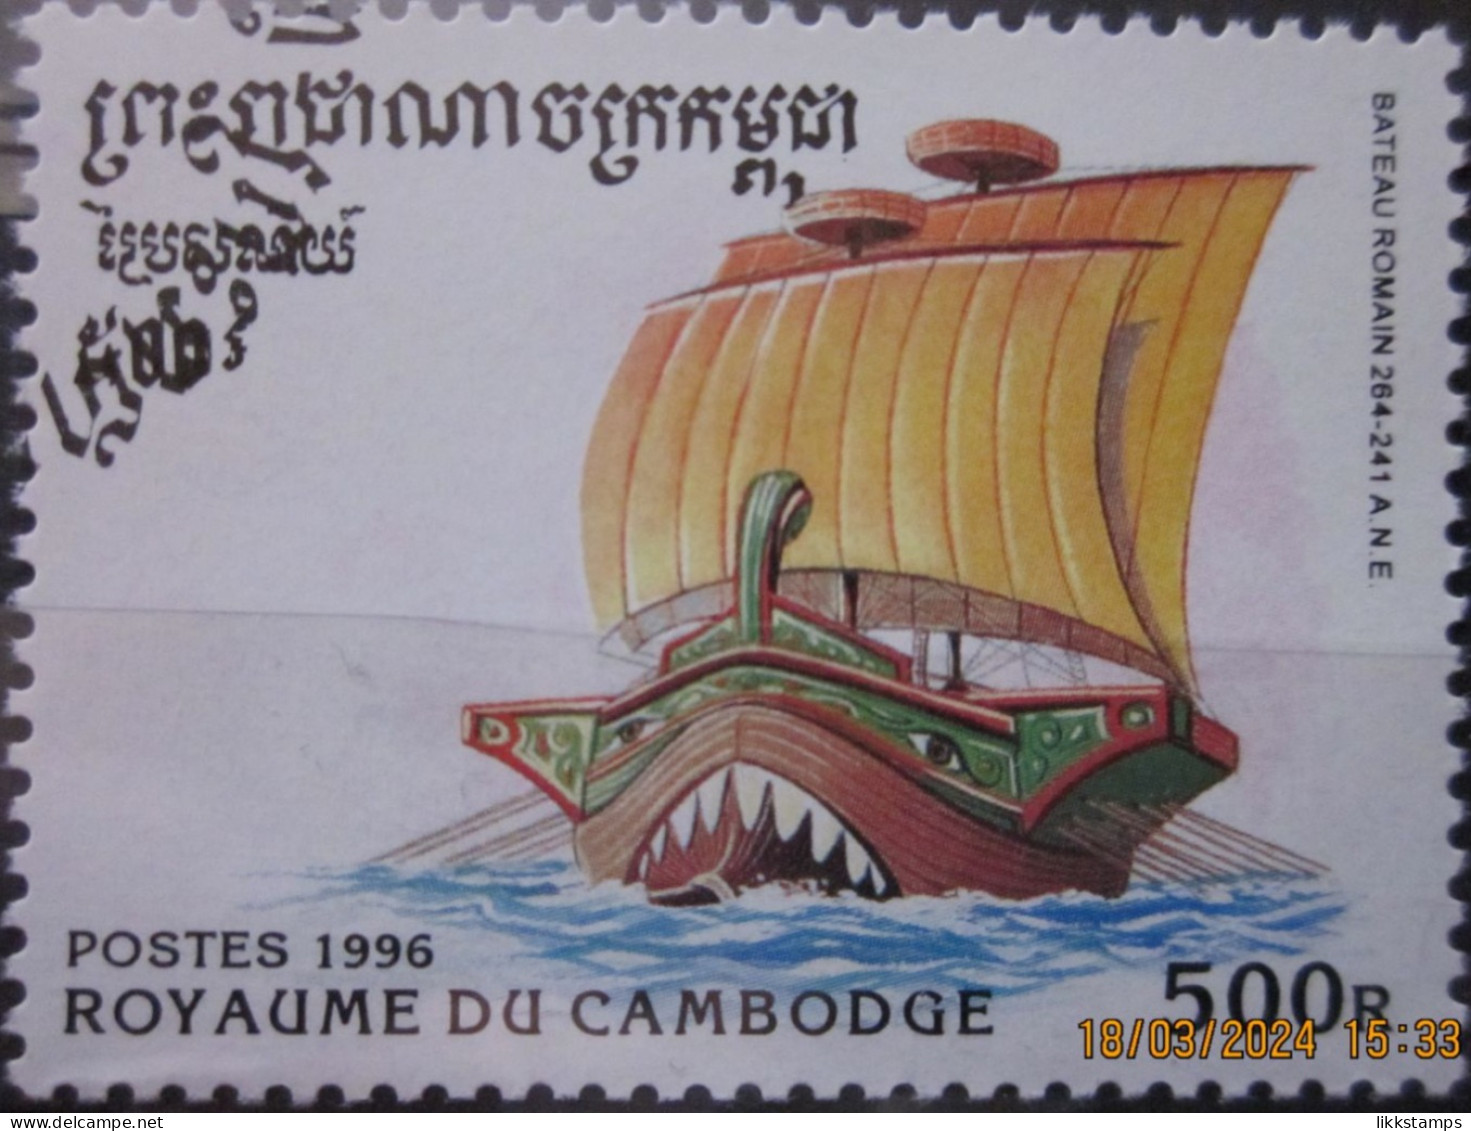 CAMBODIA 1996 ~ S.G. 1591, ~ SHIPS. ~ VFU #03321 - Cambodia